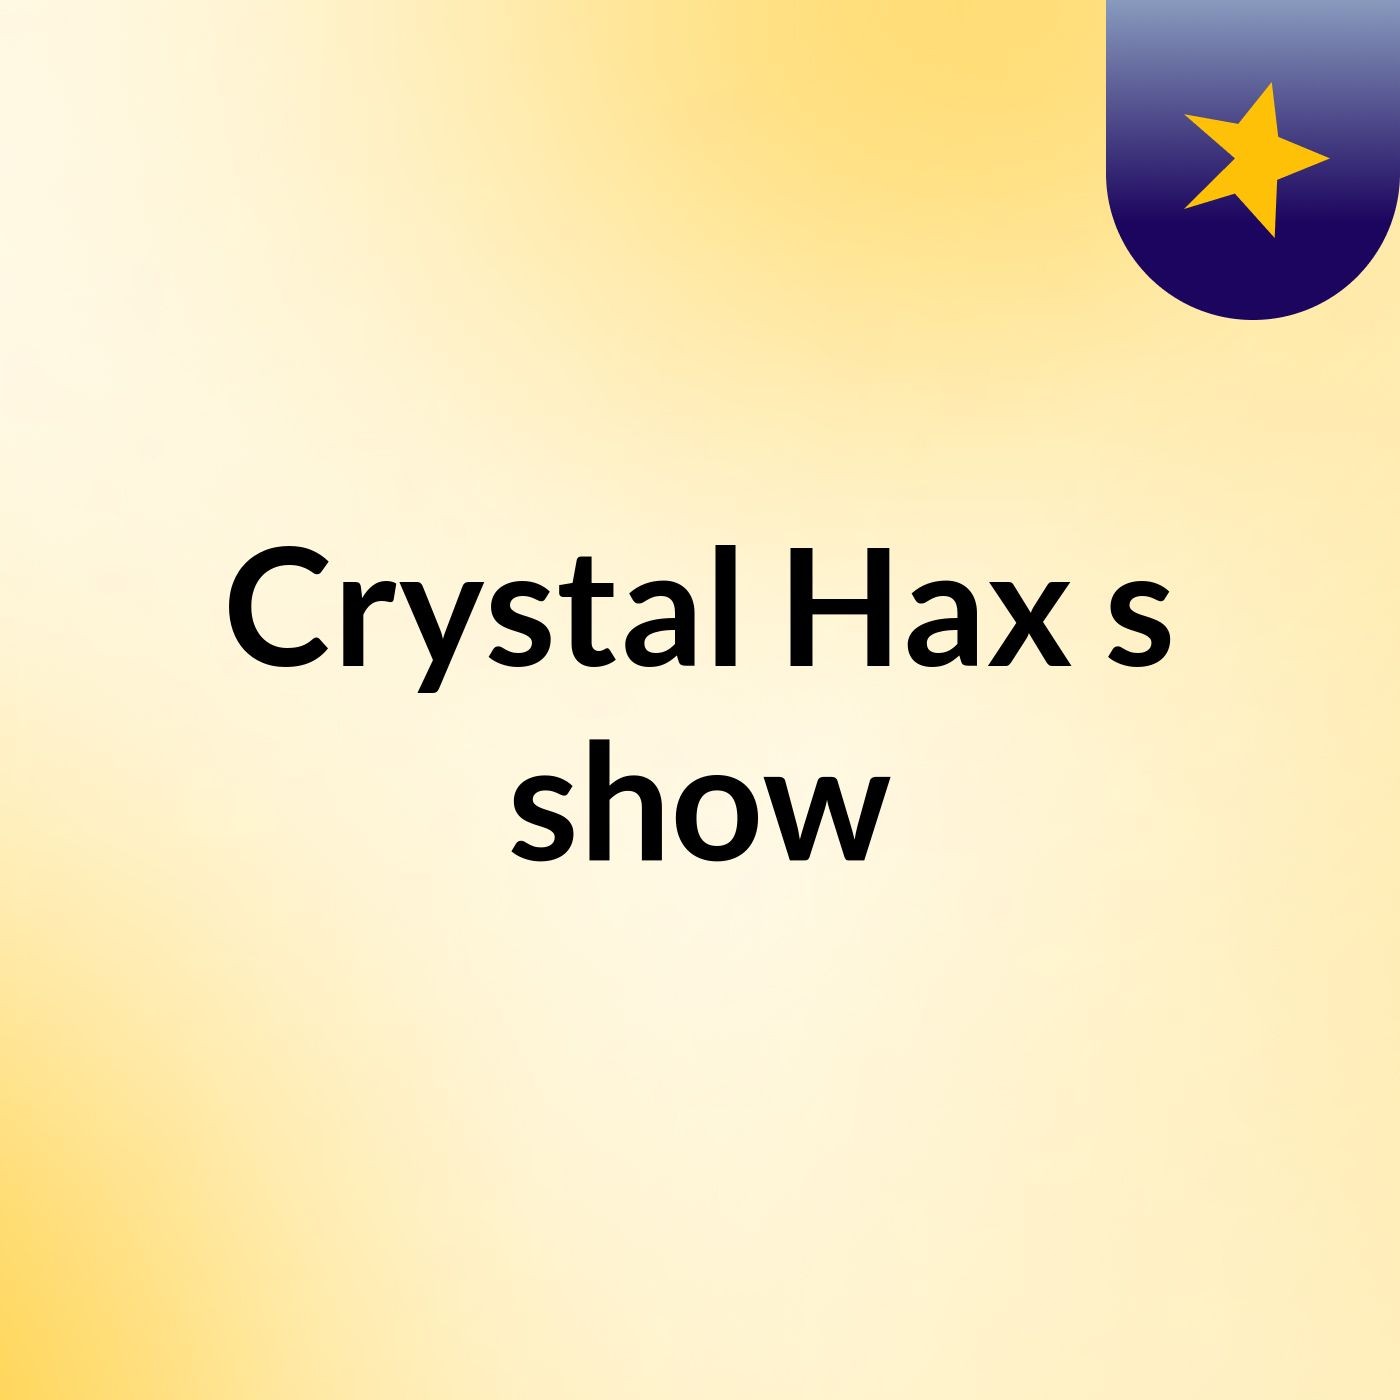 Crystal Hax's show